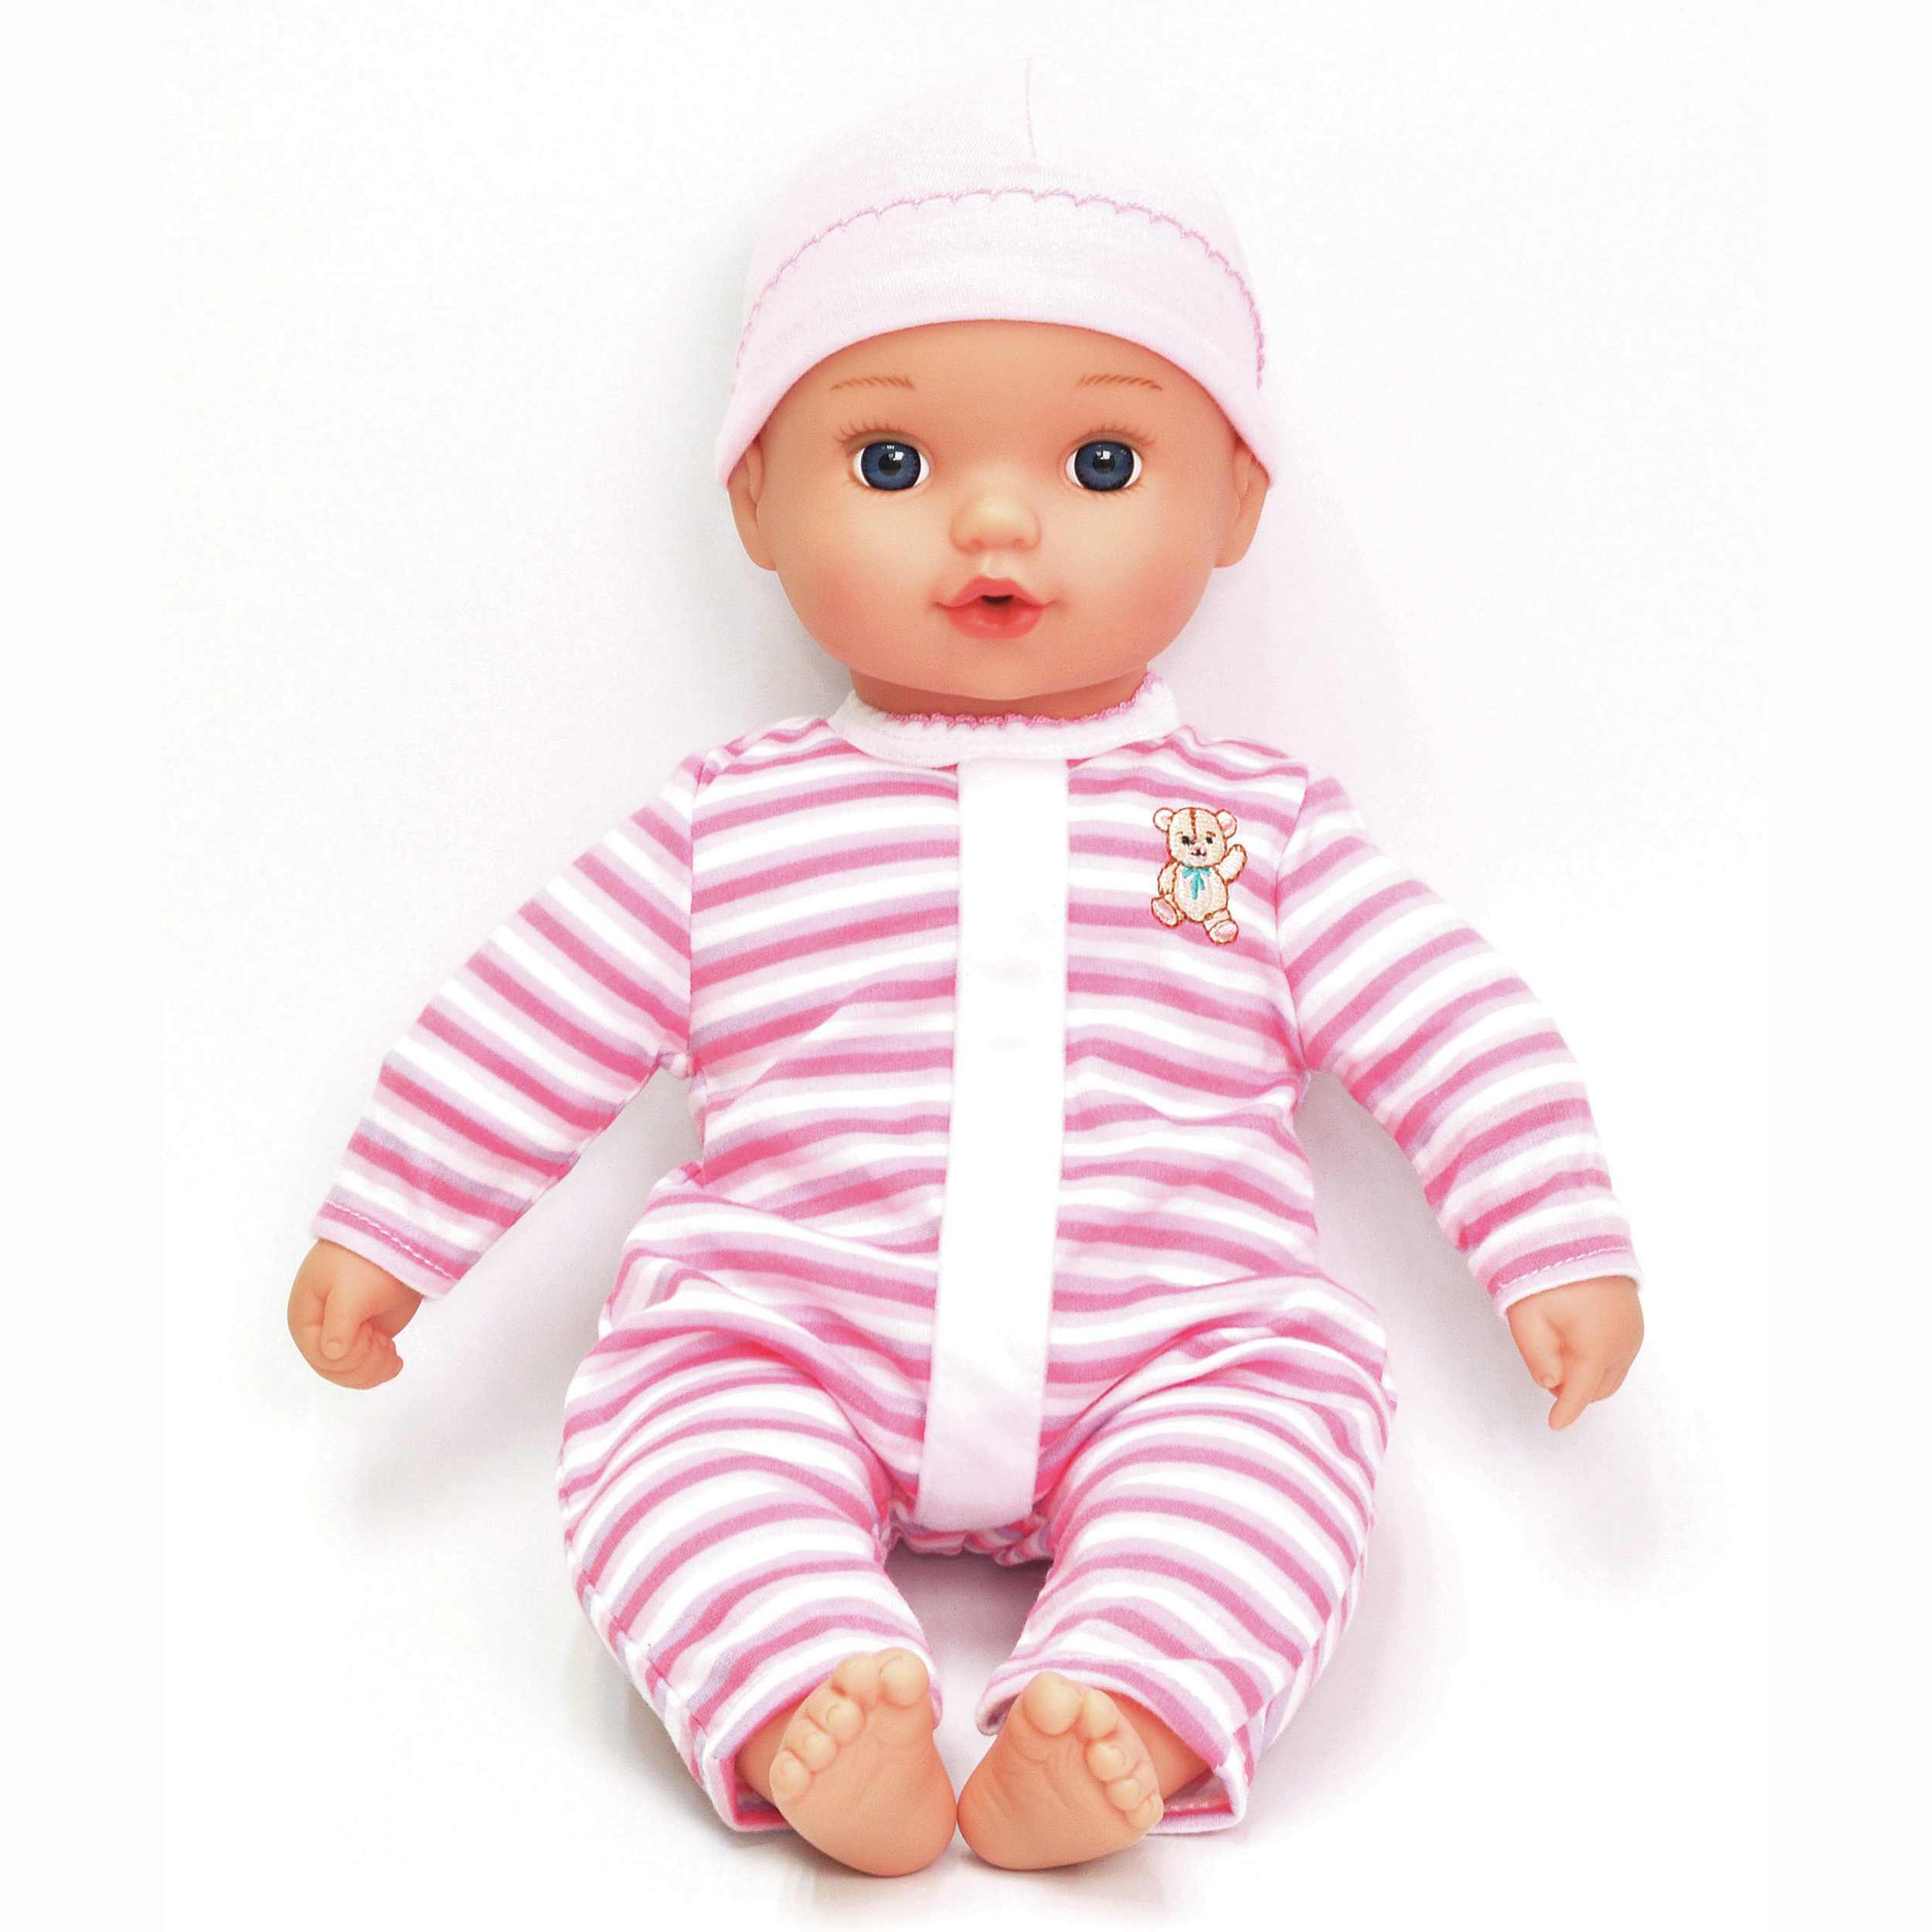 Newberry Dolls 15" Interactive Baby Doll